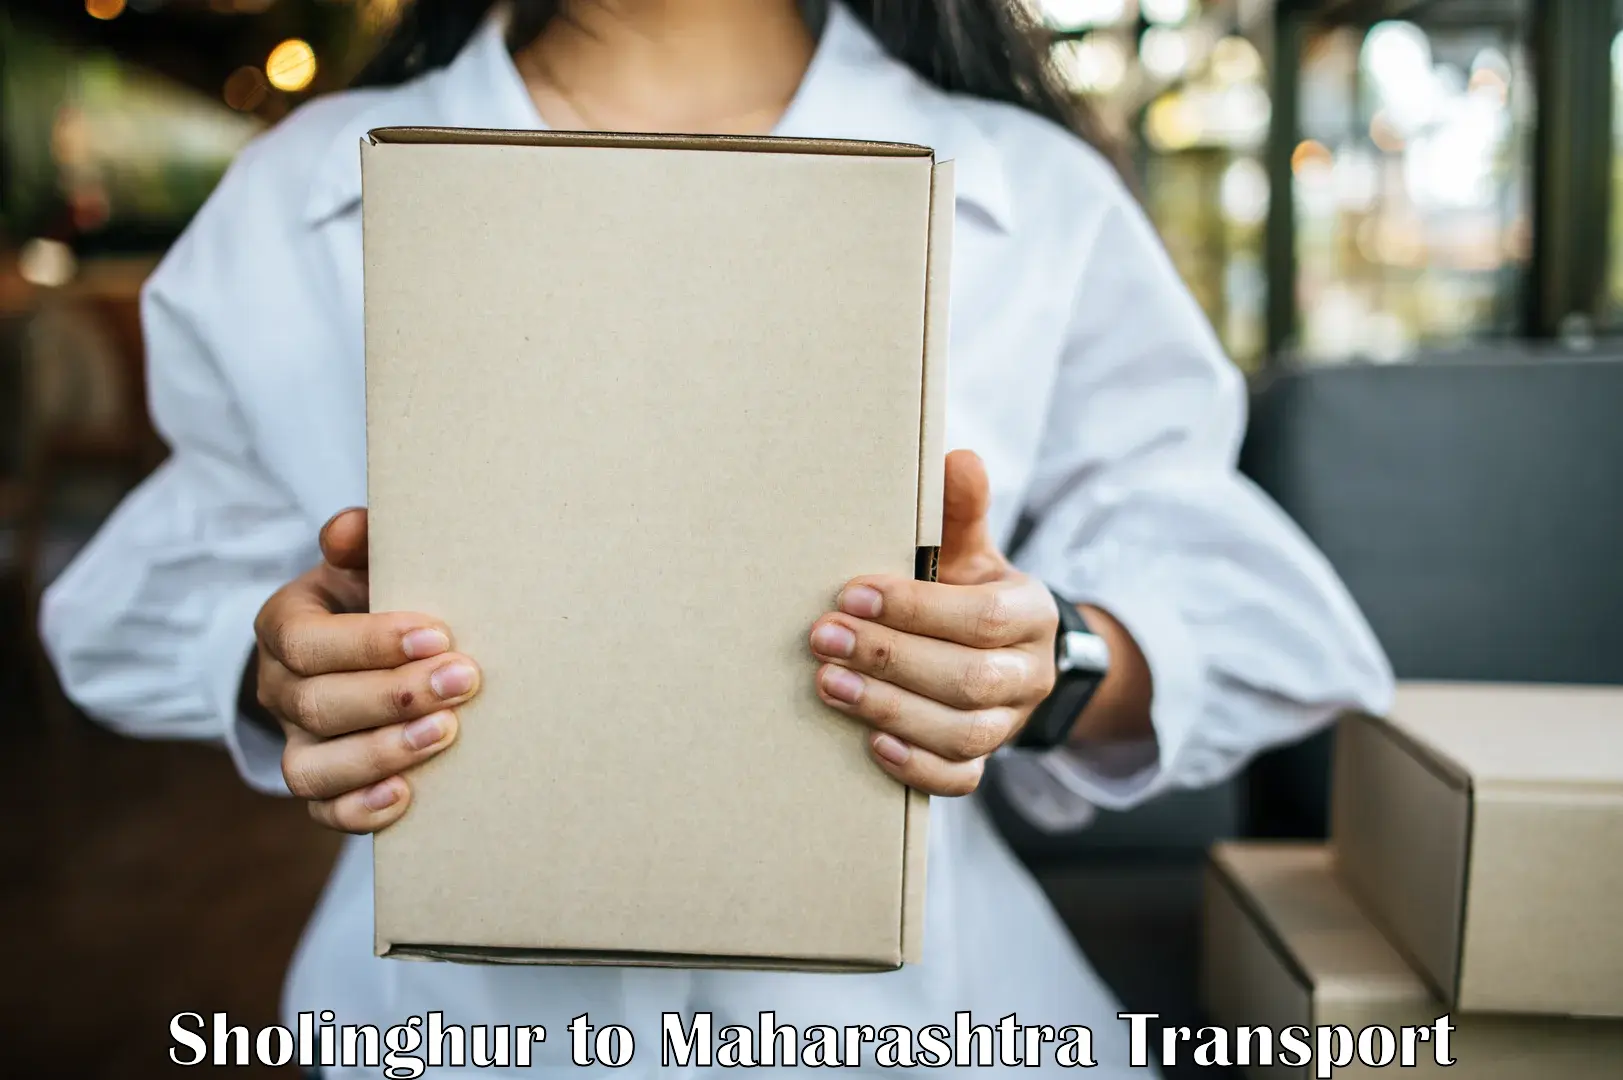 Furniture transport service Sholinghur to Gadchandur